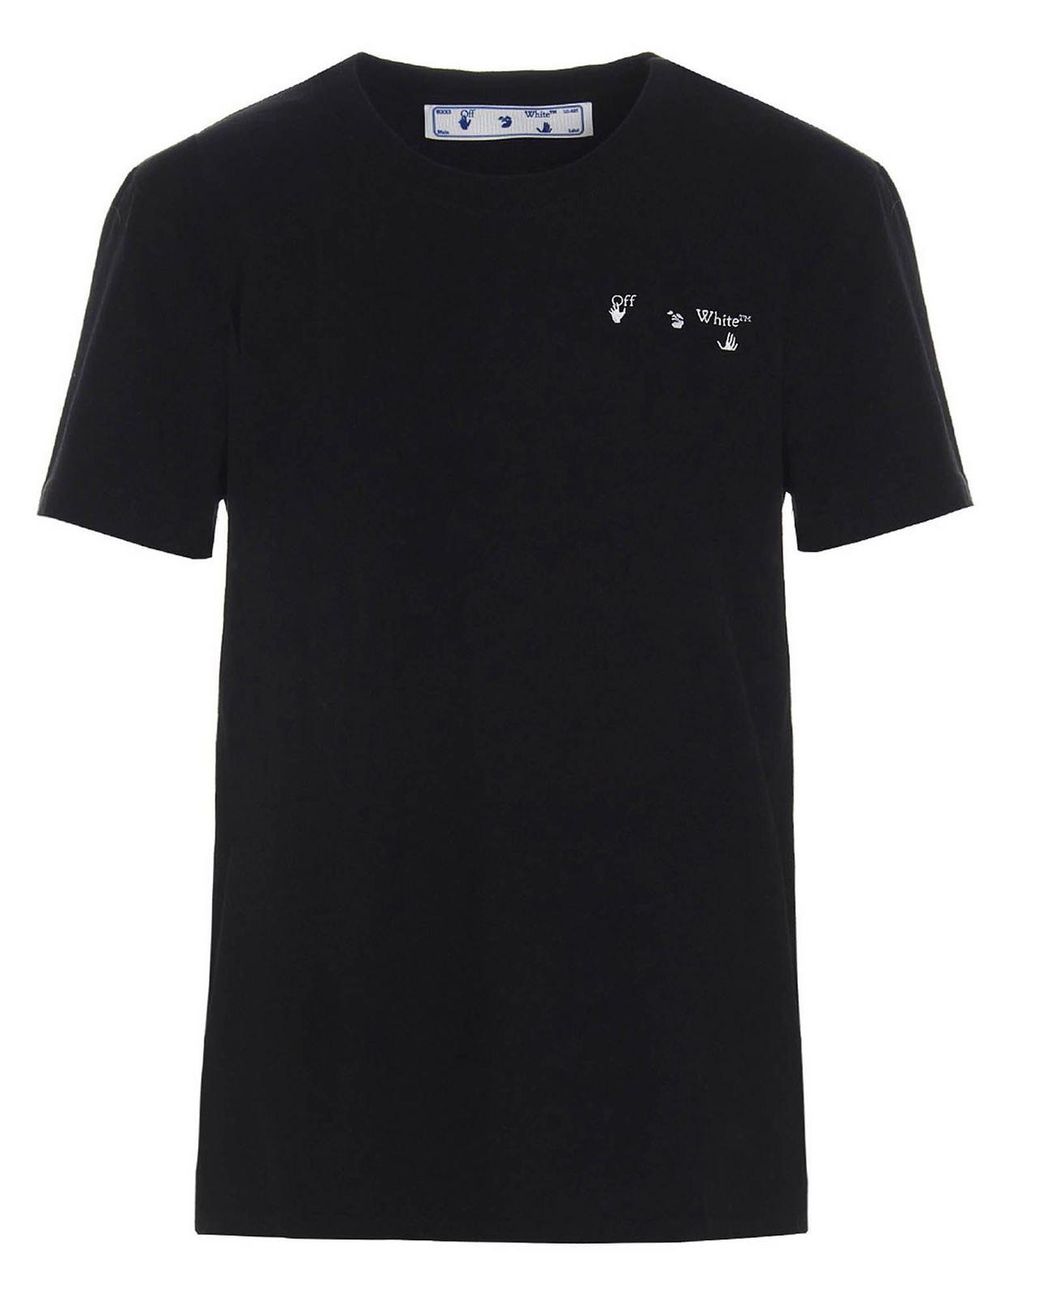 Off-White c/o Virgil Abloh Cotton Liquid Melt Arrows T-shirt in Black ...